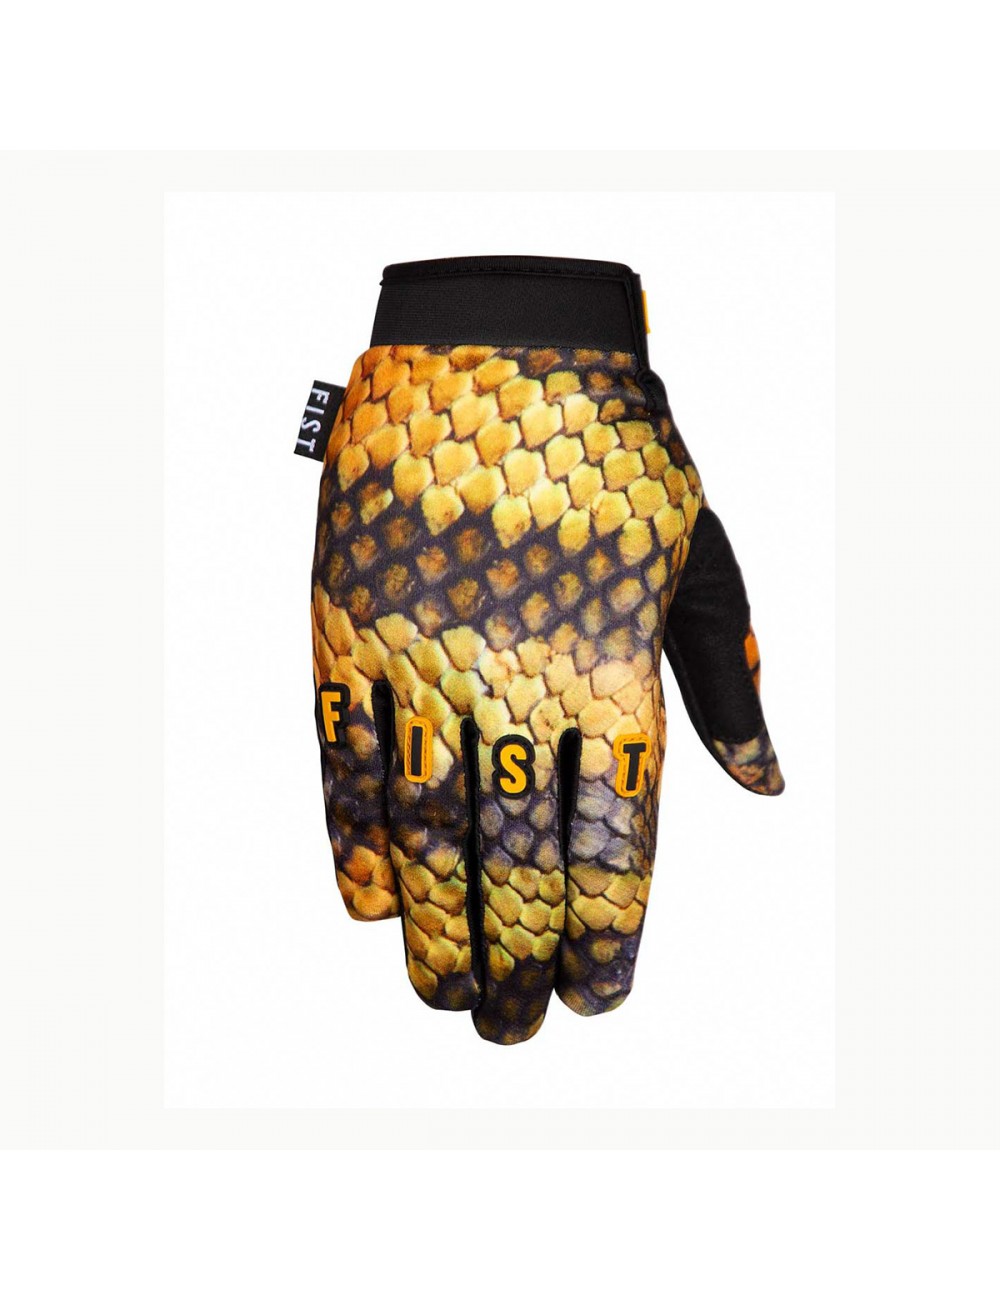 Fist Gloves - Tiger Snake_12957